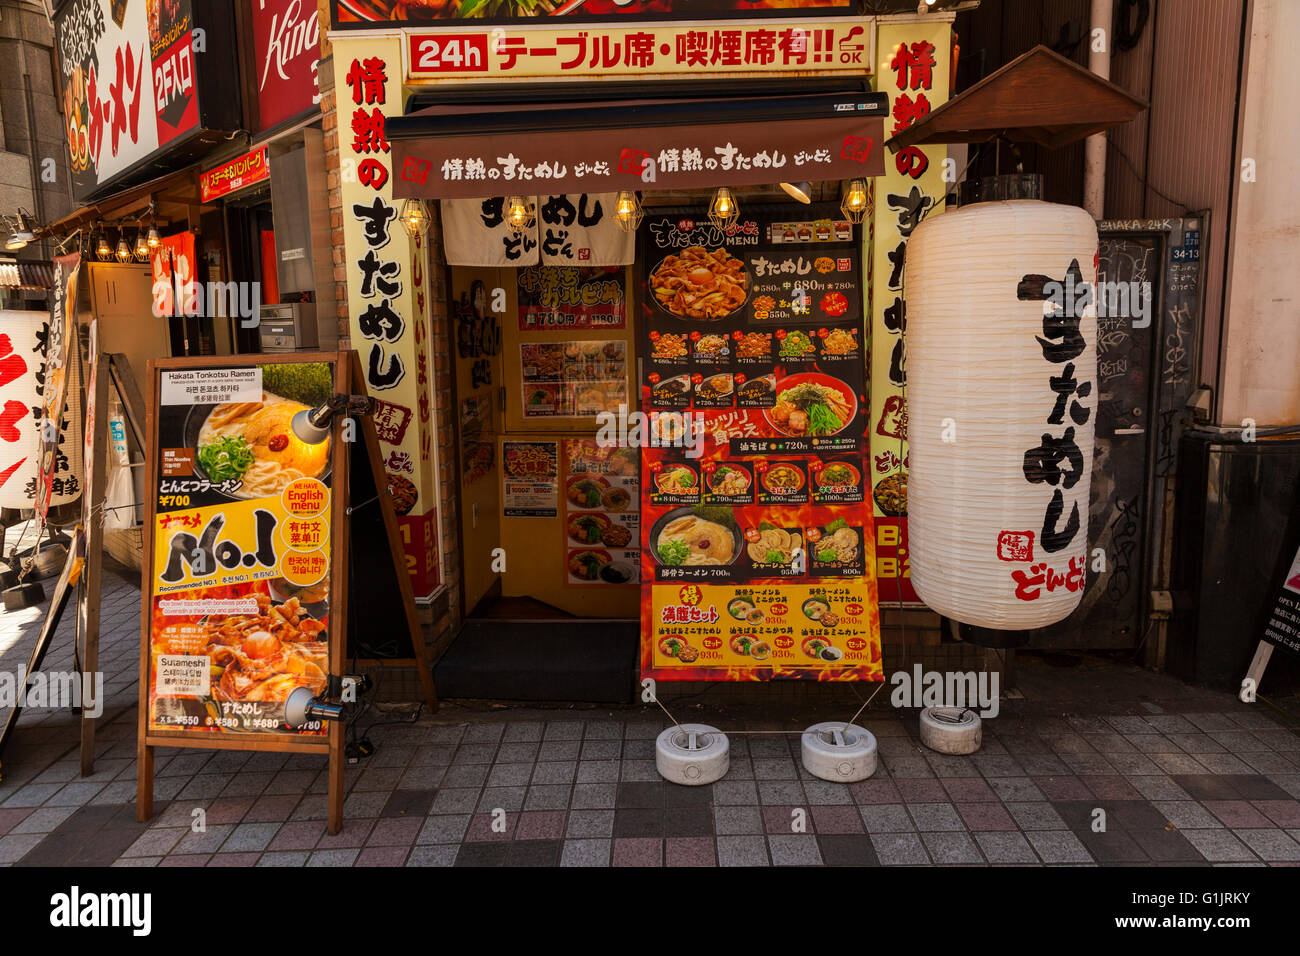 A Japanese restaurant advertising food Stock Photo